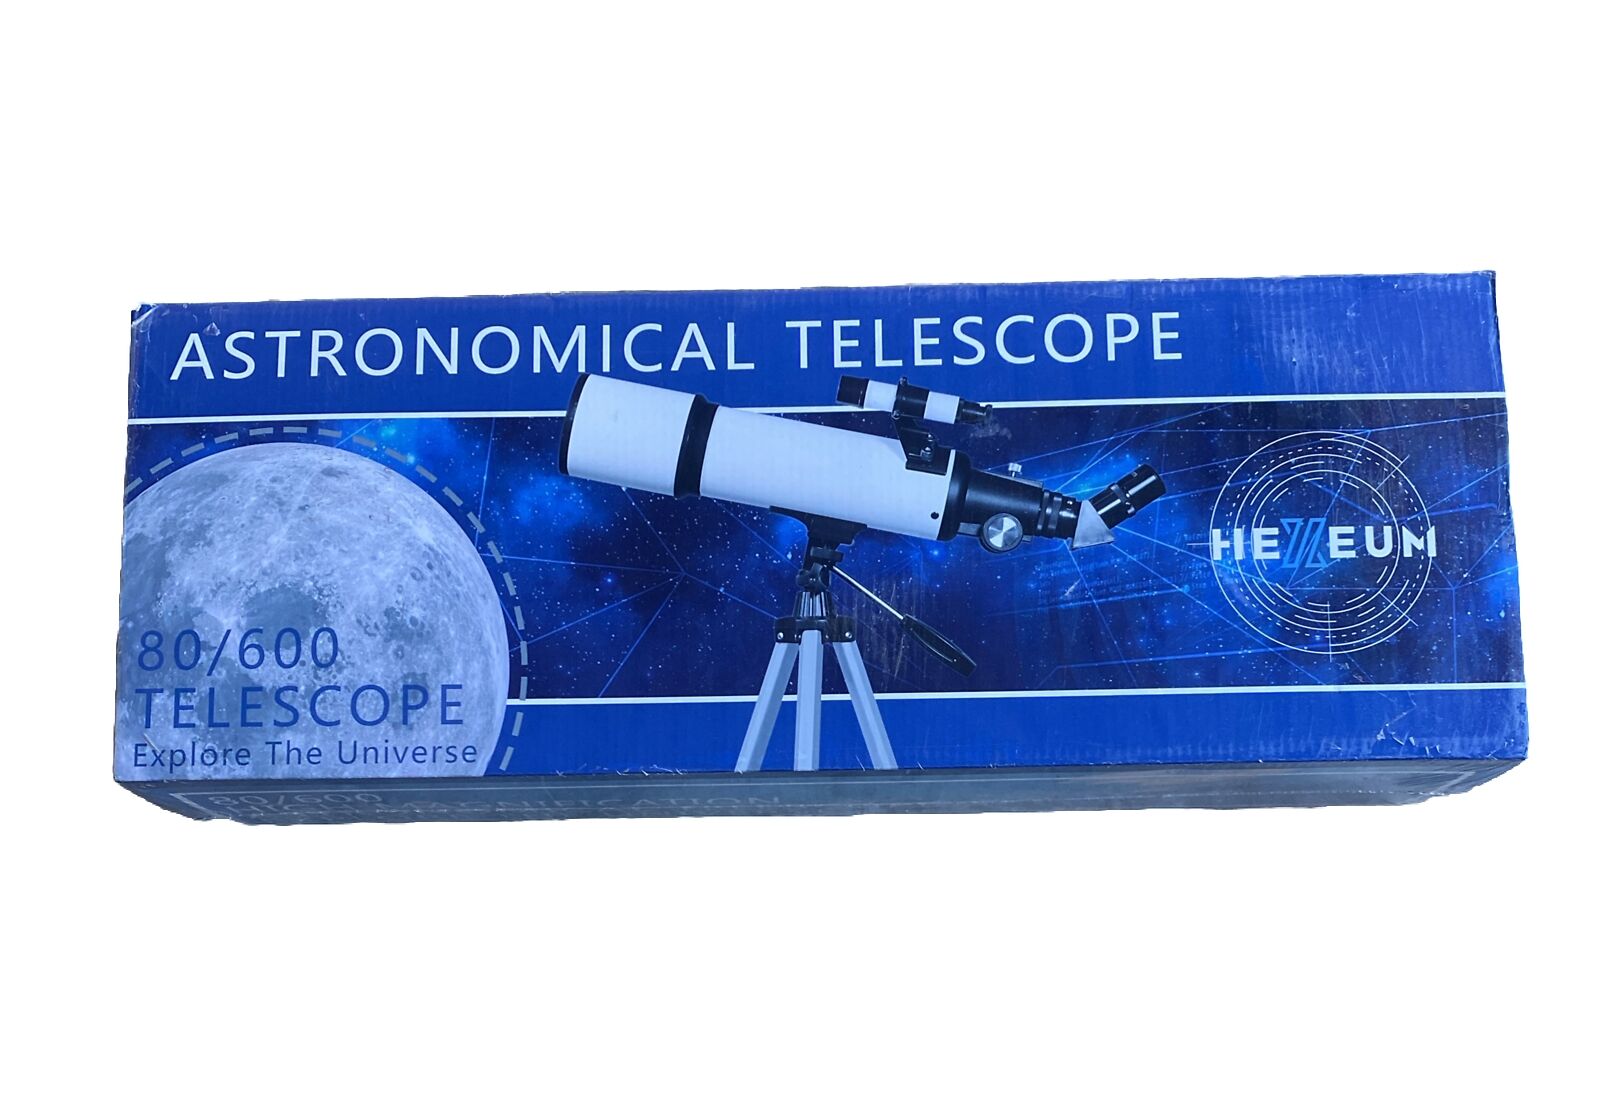 Hexeum Astronomical Portable Telescope 80mm Aperture 600mm w/ Carrying Case